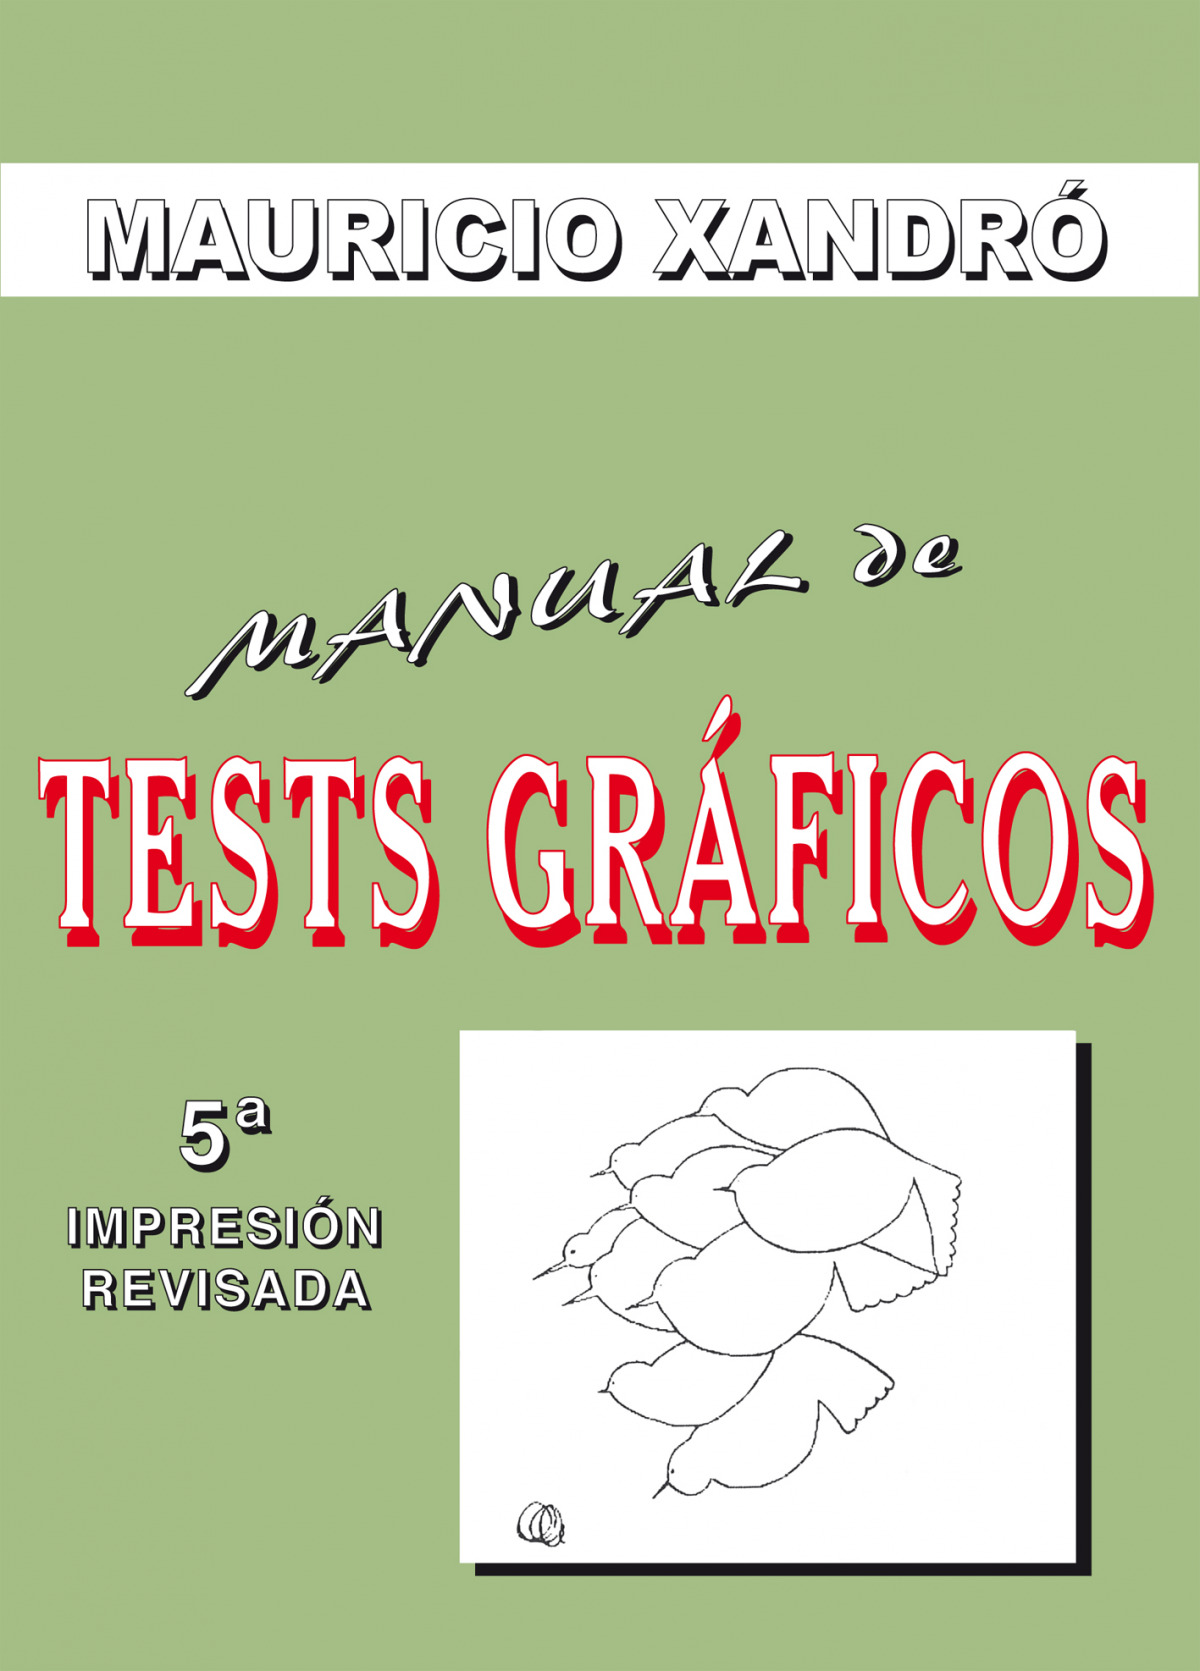 Manual de tests graficos (5ª edicion) - Xandro,Mauricio